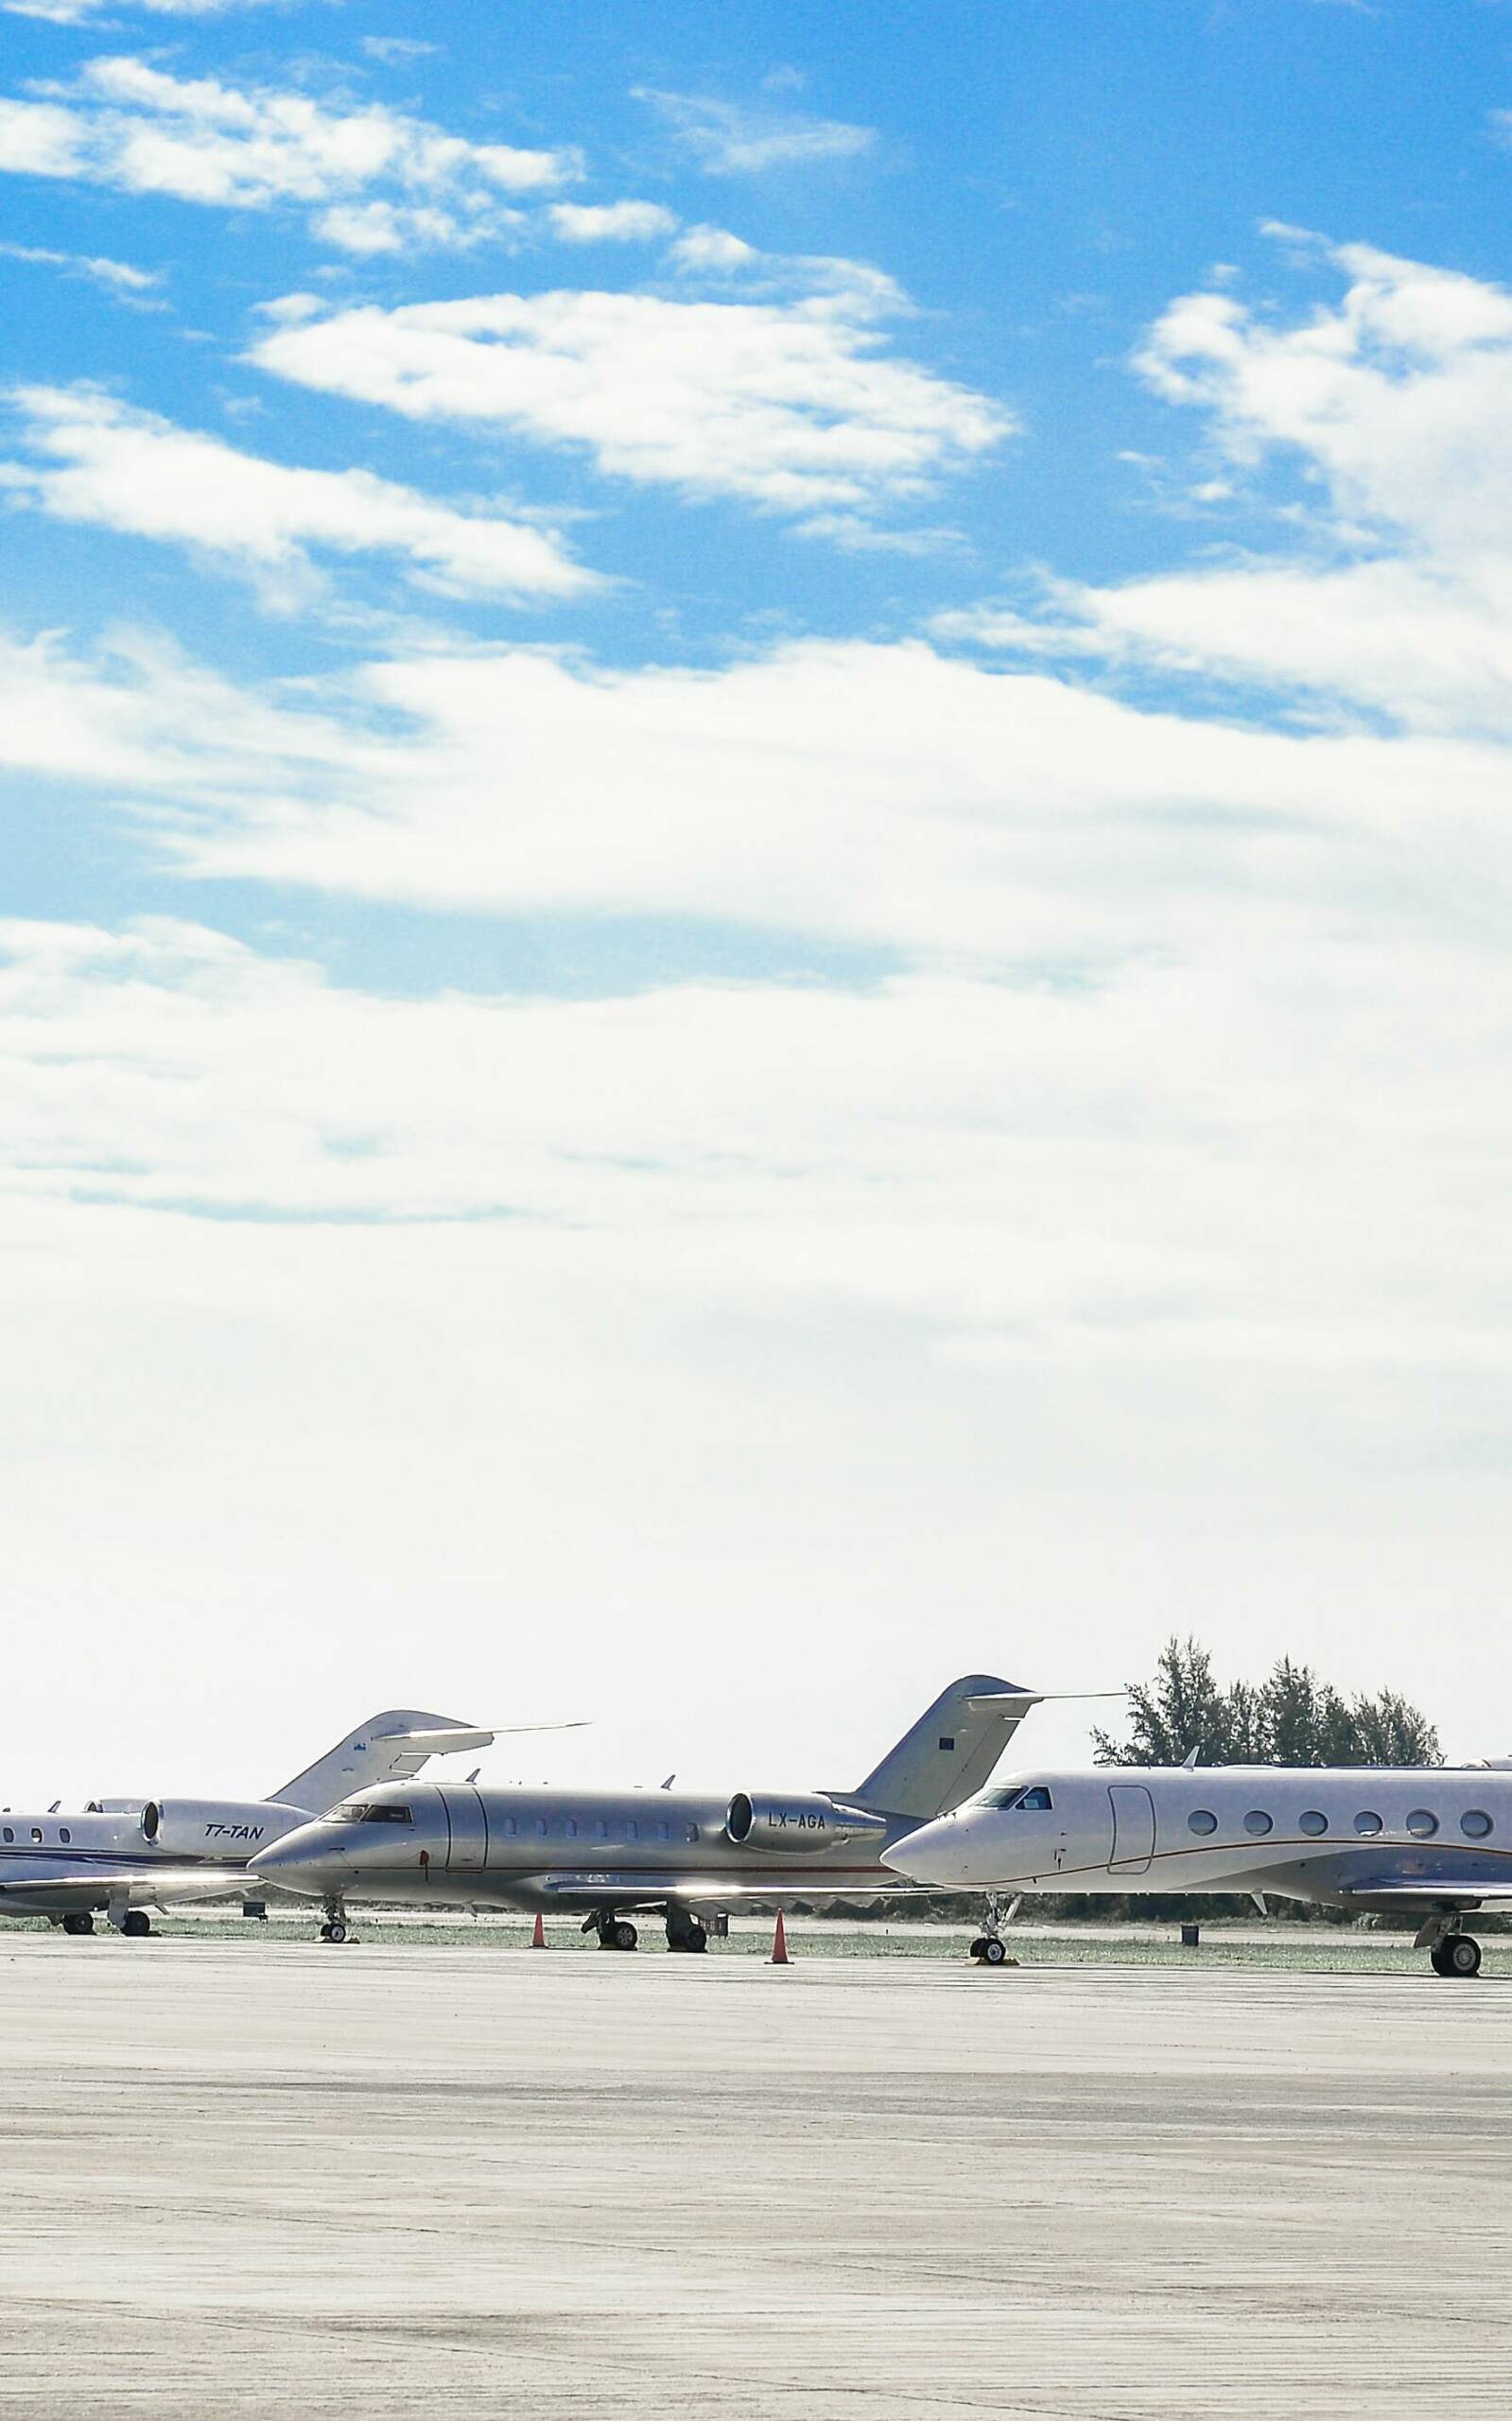 MK Partnair Picture Tarmac Airport Maldive Private Jet static